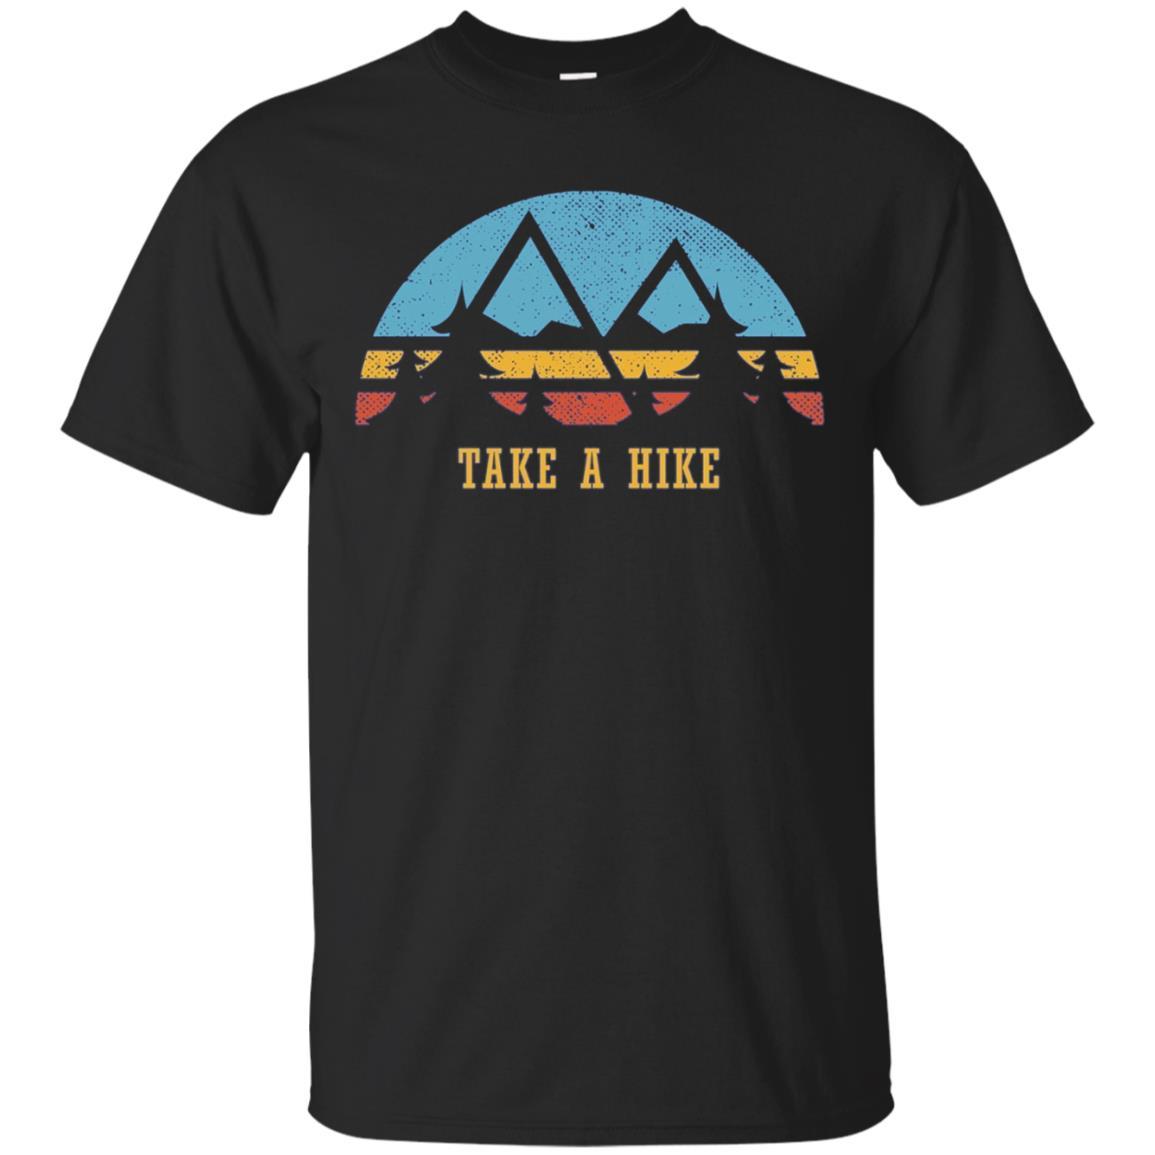 Retro Sunset Hiking Shirt Go Take A Hike Gift